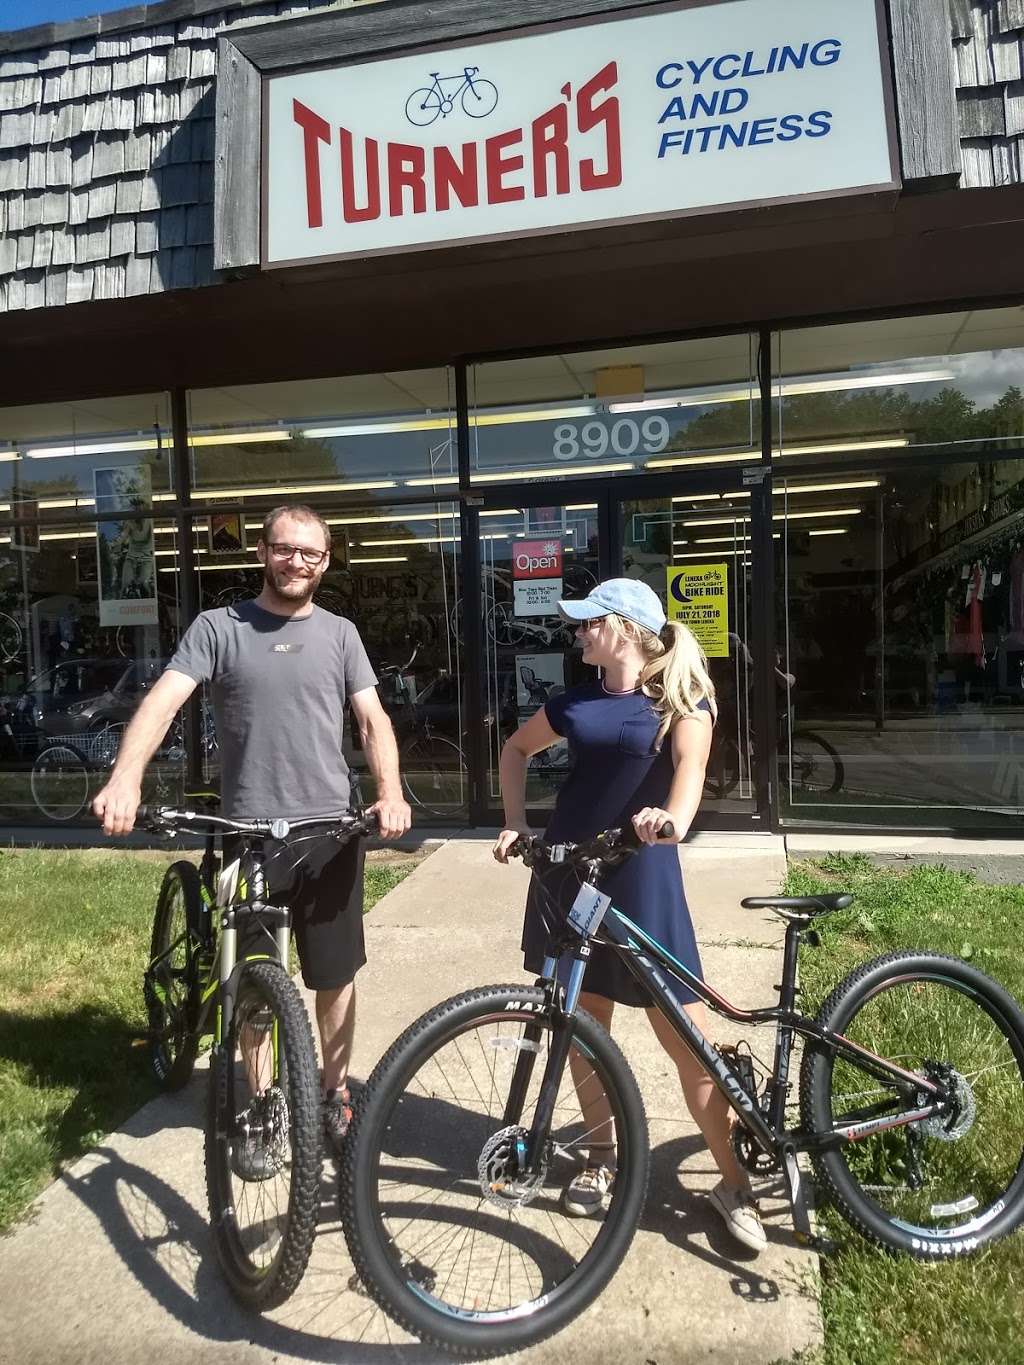 Turners Cycling & Fitness | 8909 Santa Fe Dr, Overland Park, KS 66212 | Phone: (913) 381-5298